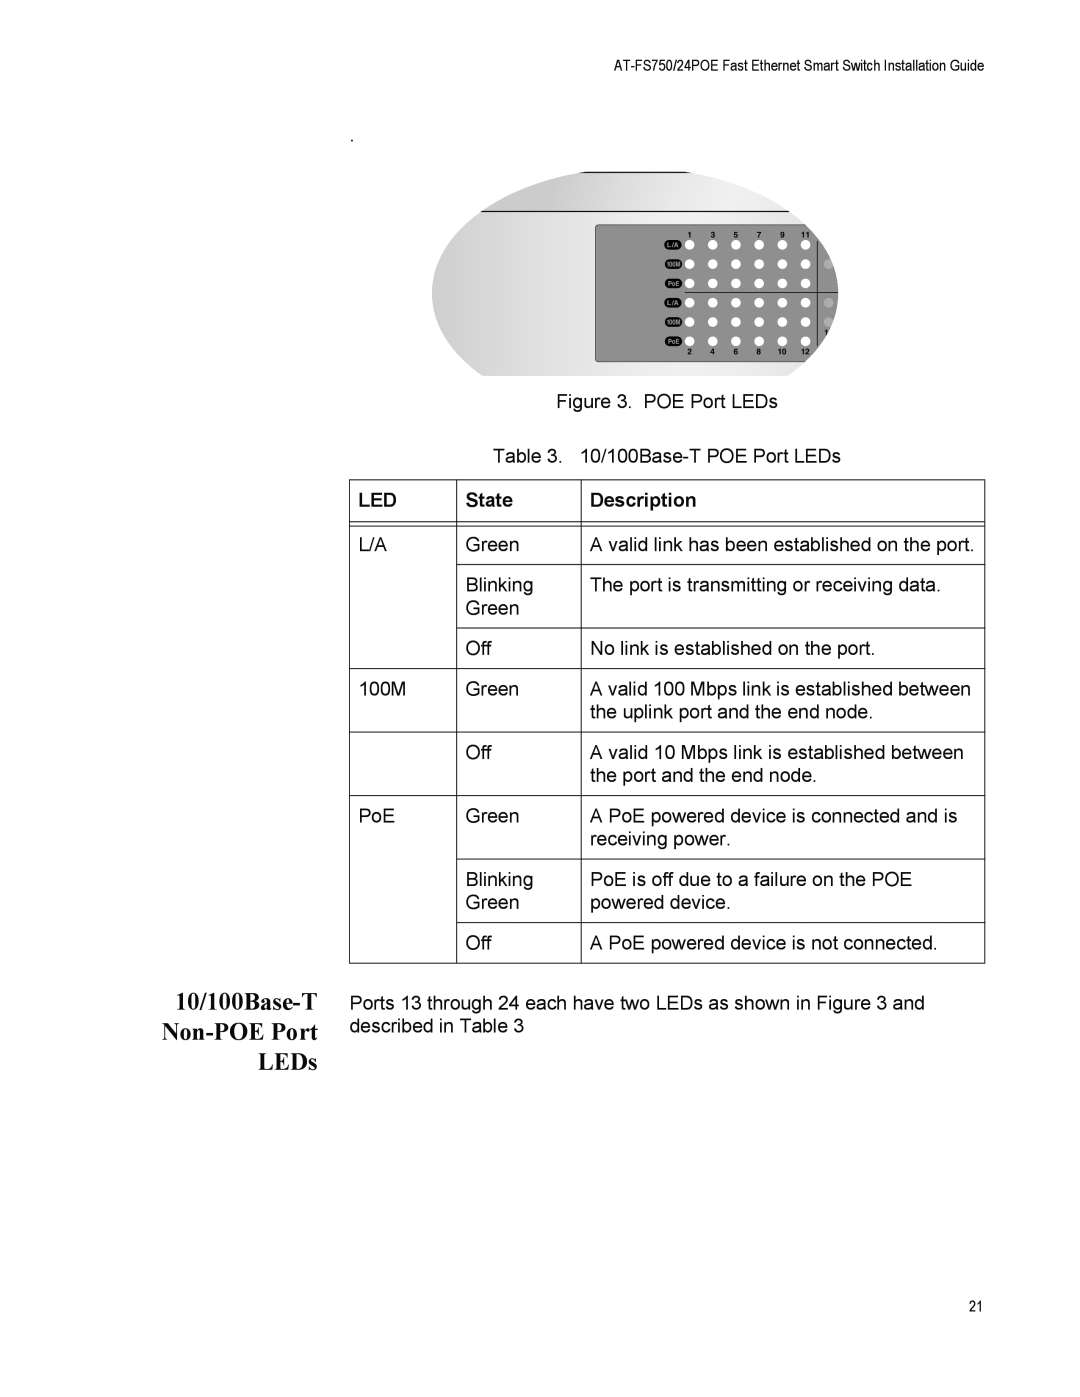 Allied Telesis AT-FS750/24POE manual 10/100Base-T Non-POE Port LEDs, State, Description 